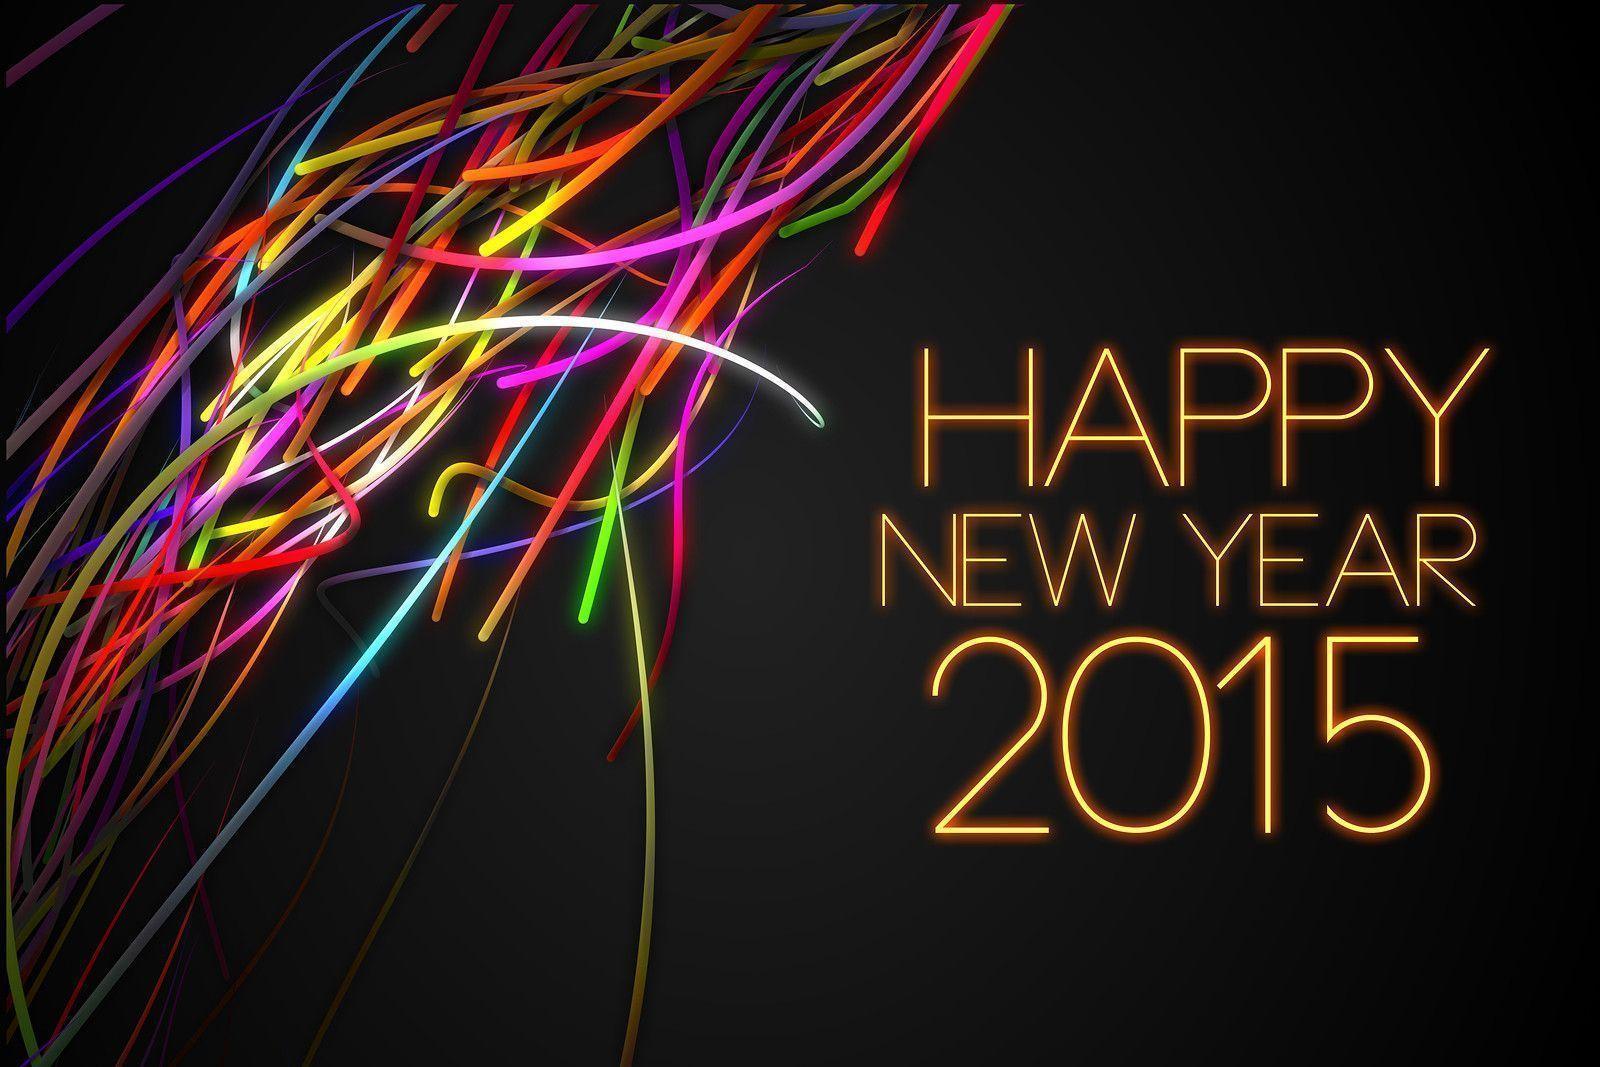 Happy New Year 2015 Image, Pics, Wallpaper, Greetings, Photo